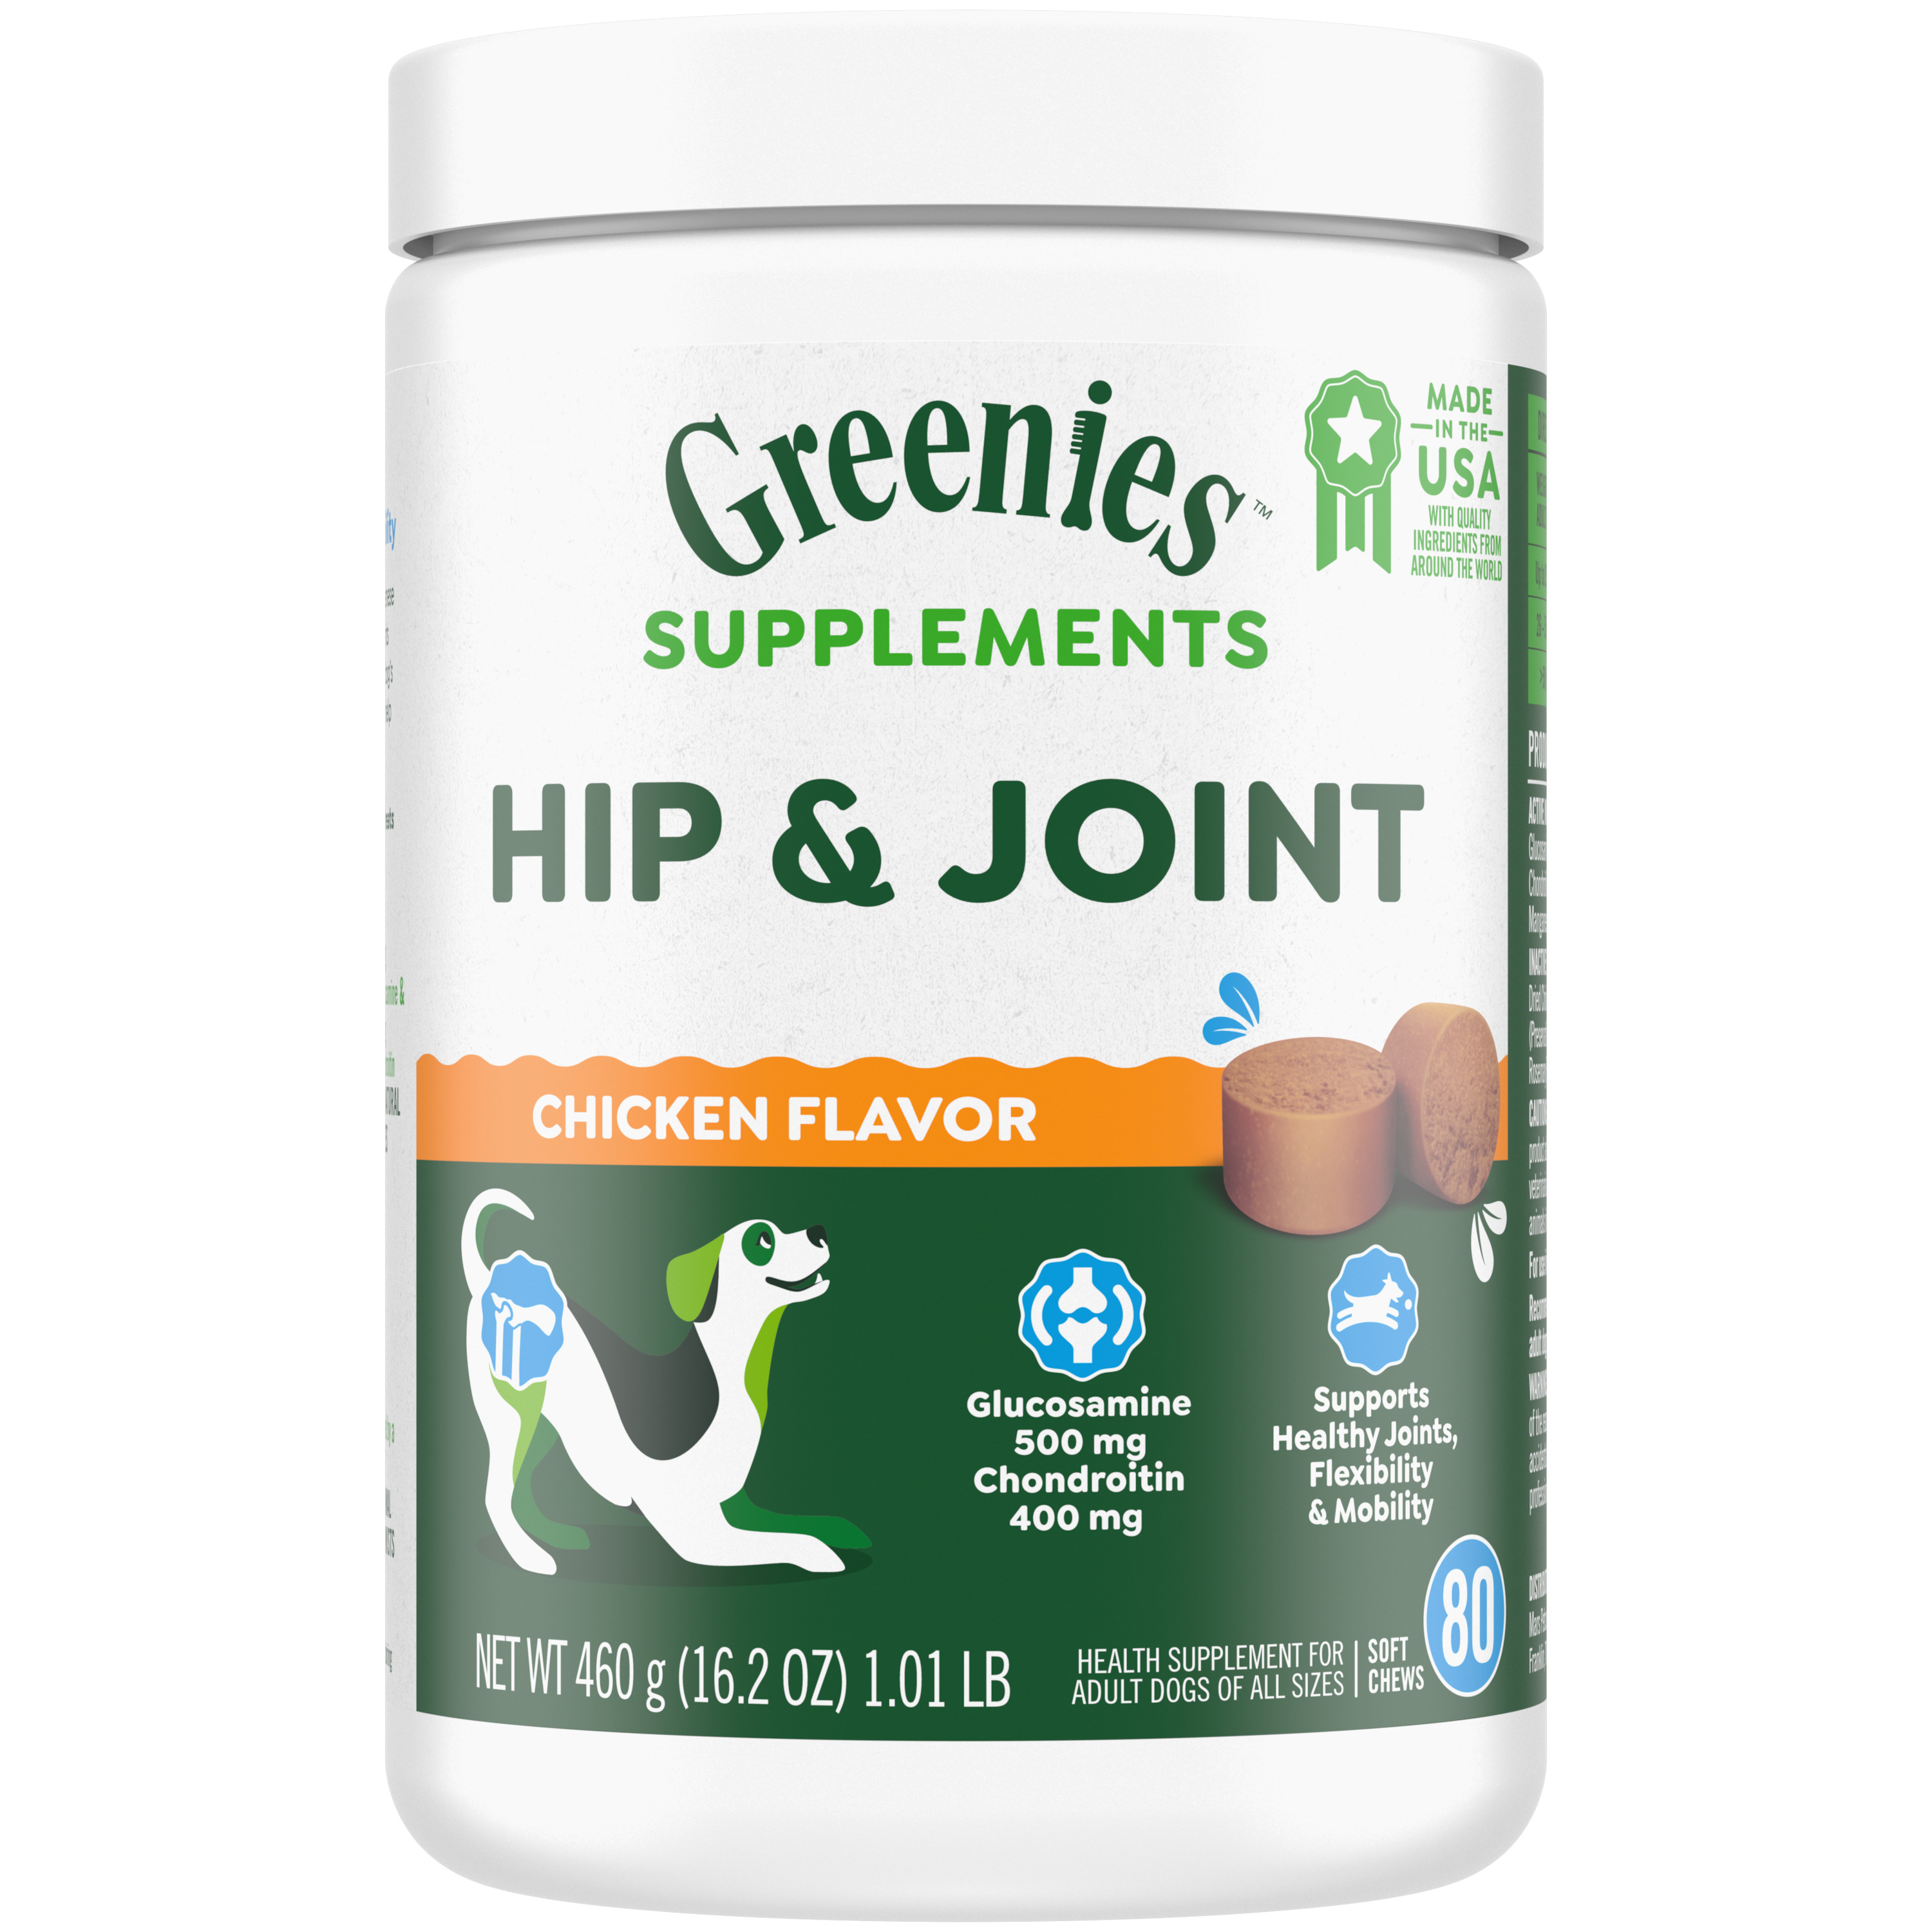 16.2oz Greenies Dog Hip & Joint Supplement - Supplements